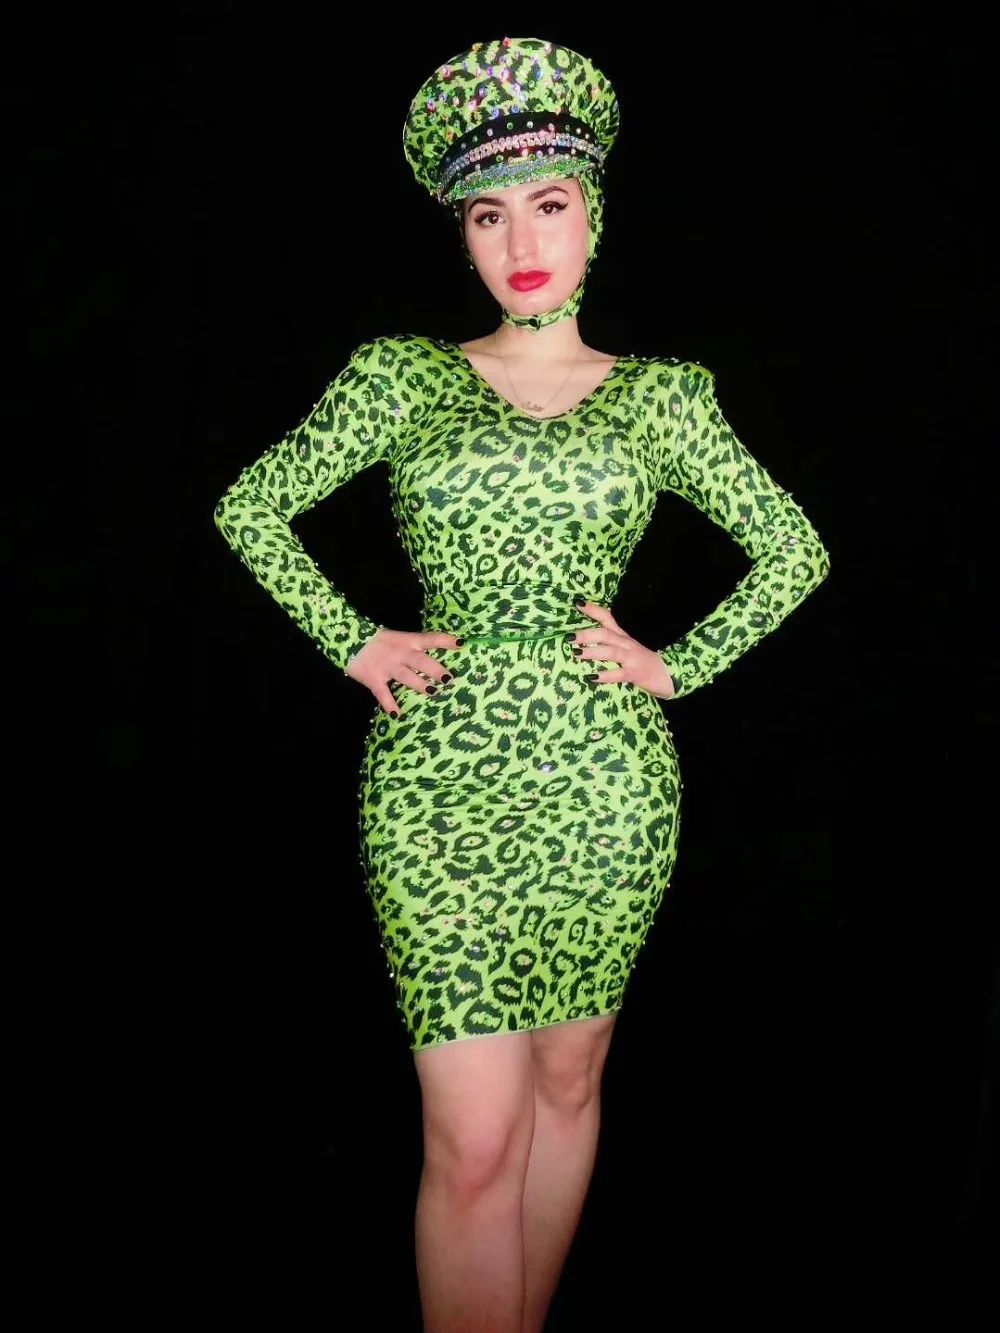 2020 New Sexy Green Leopard Spandex Stretch Dress Party Women Singer Nightclub Dance Outfit One-piece Skinny Set Dress+Hat